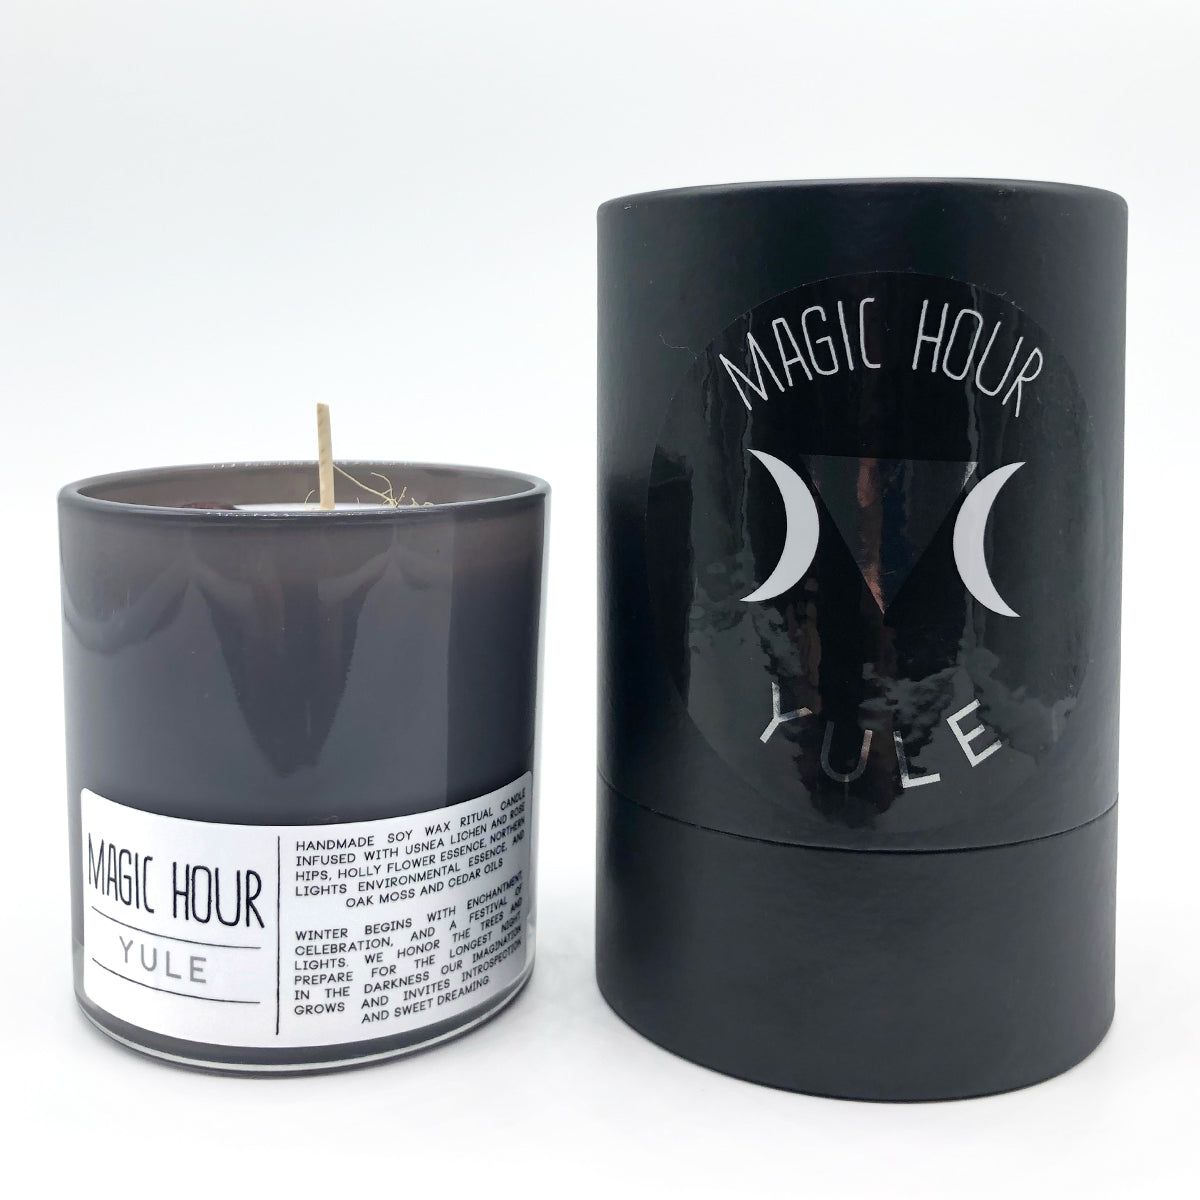 Yule / Winter Solstice Ritual Candle